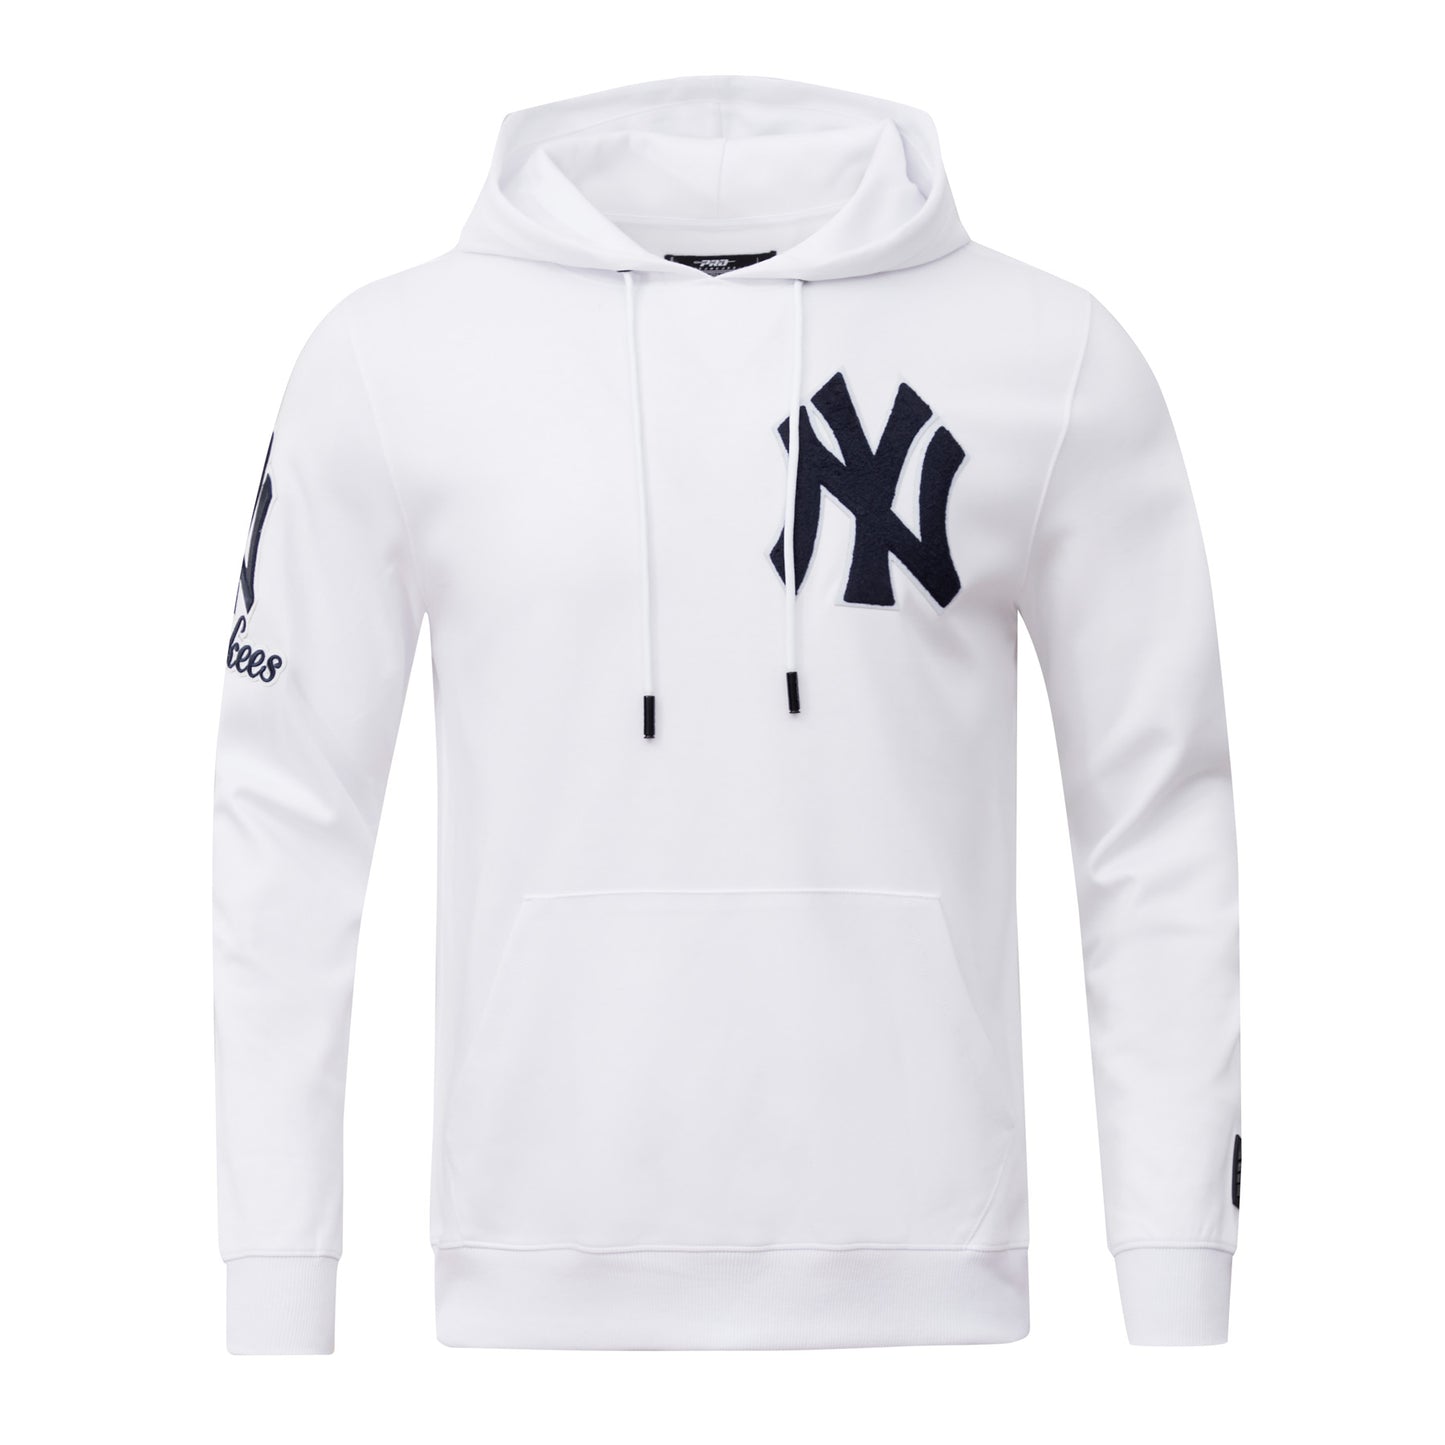 Pro Max- new york yankees baseball jacket – Major Key Clothing Shop